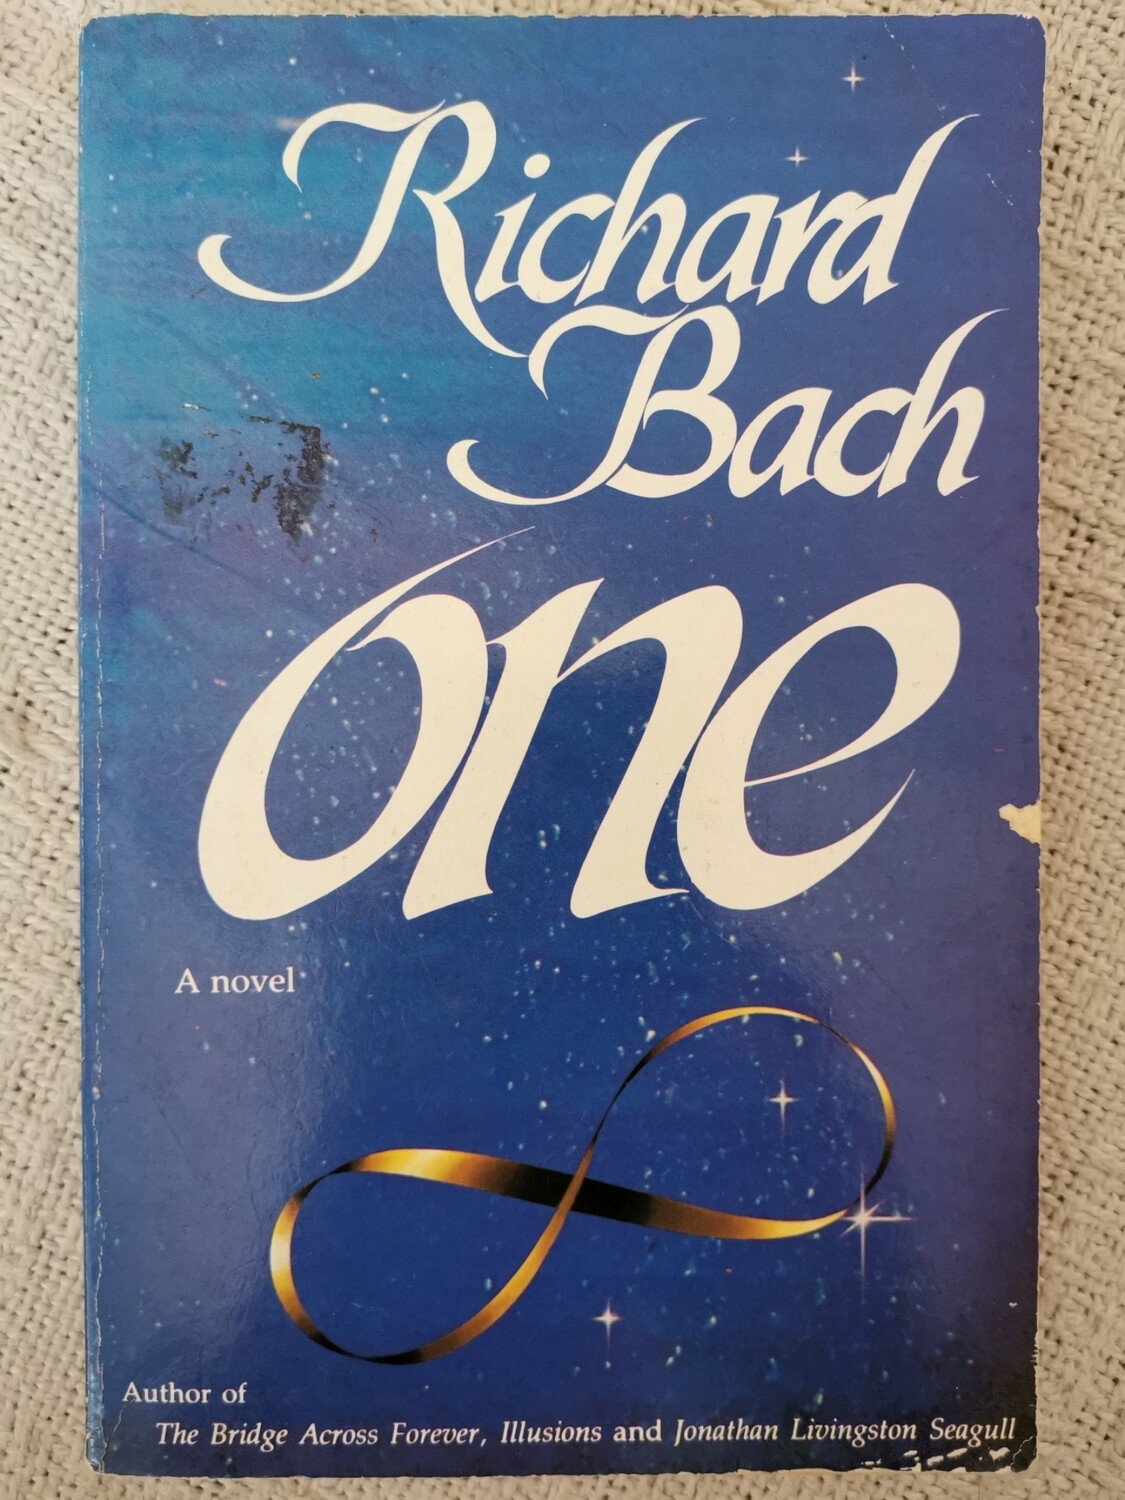 One, Richard Bach